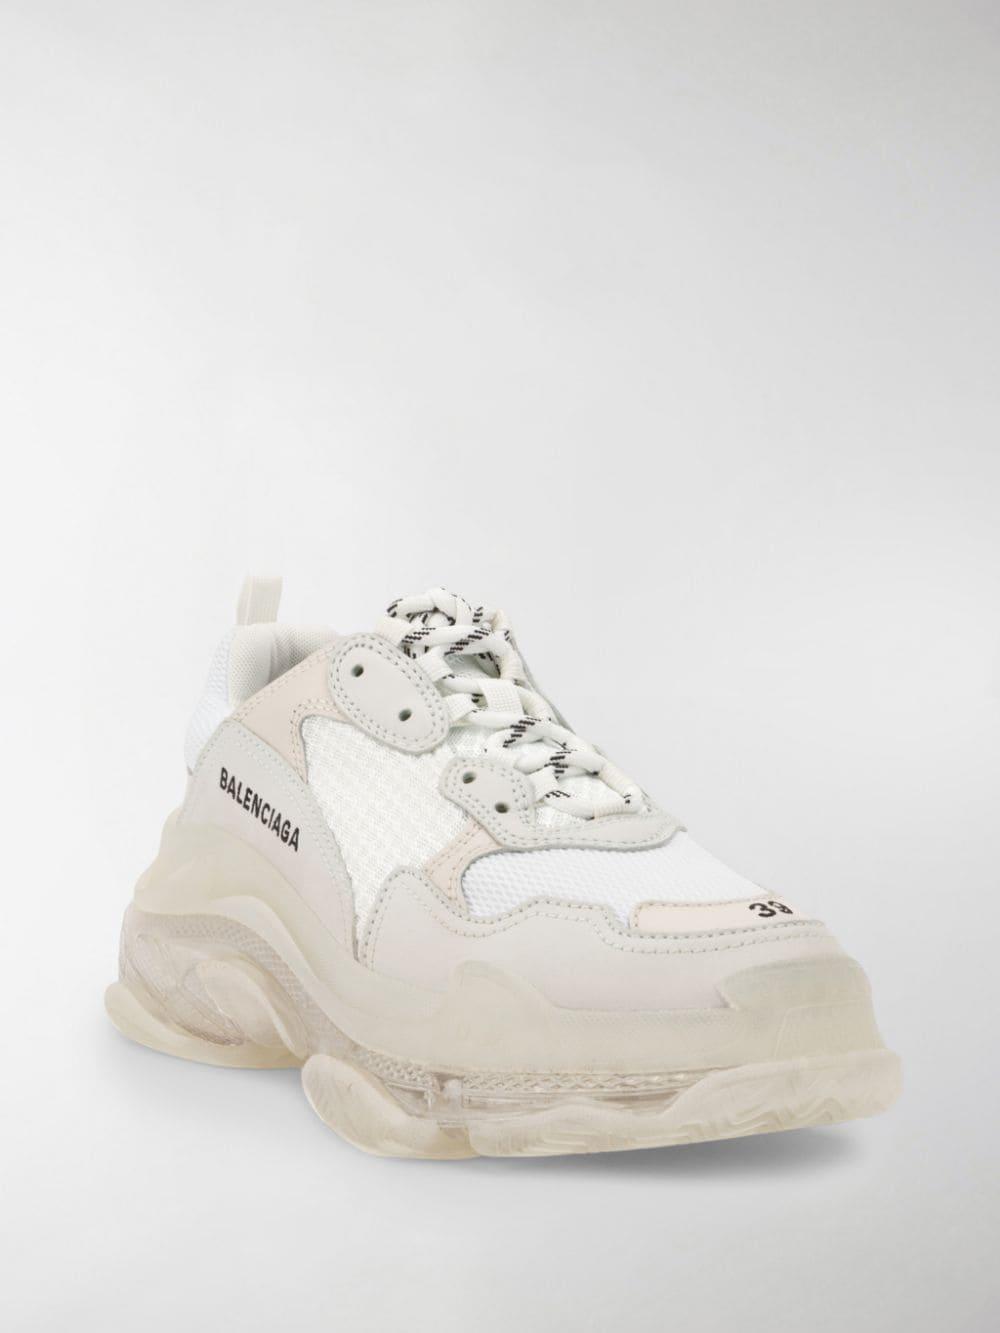 Balenciaga Triple S Sneakers in White - Lyst